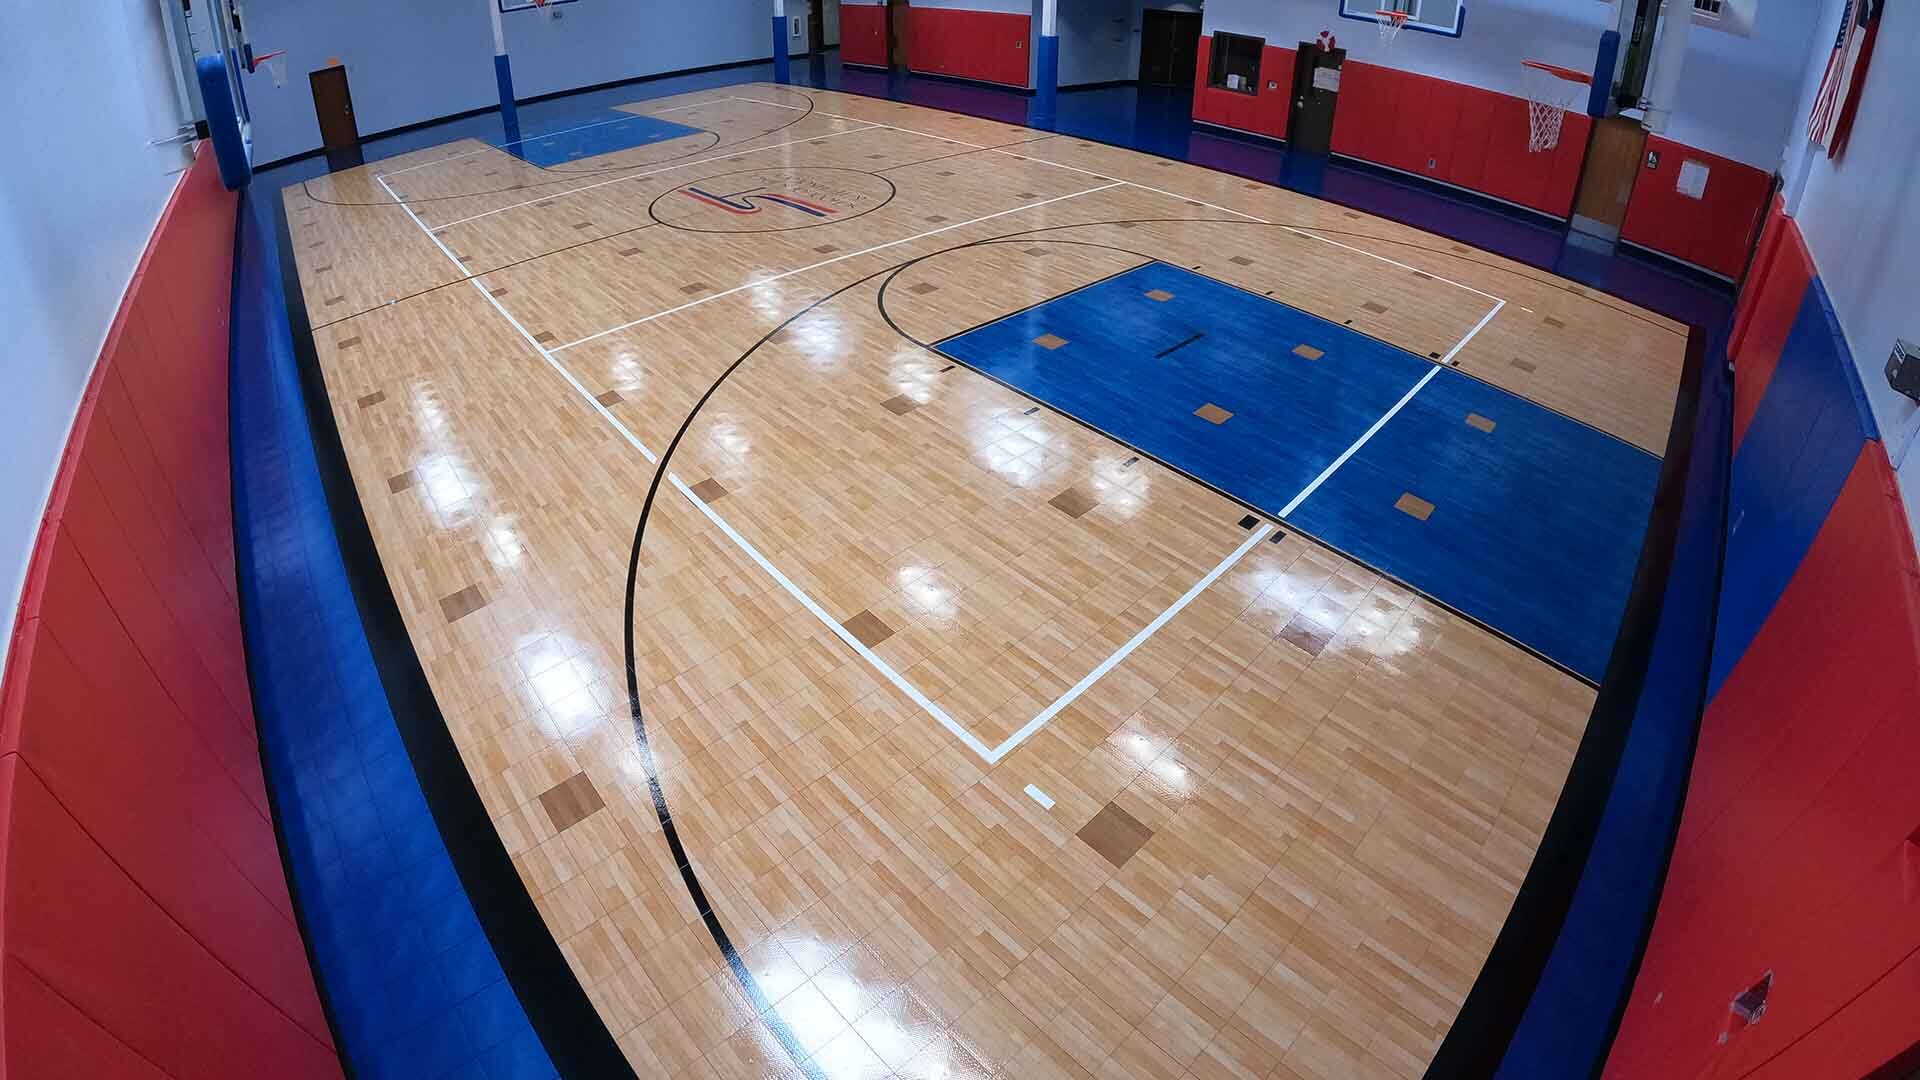 Completed San Antonio Charter School Gym